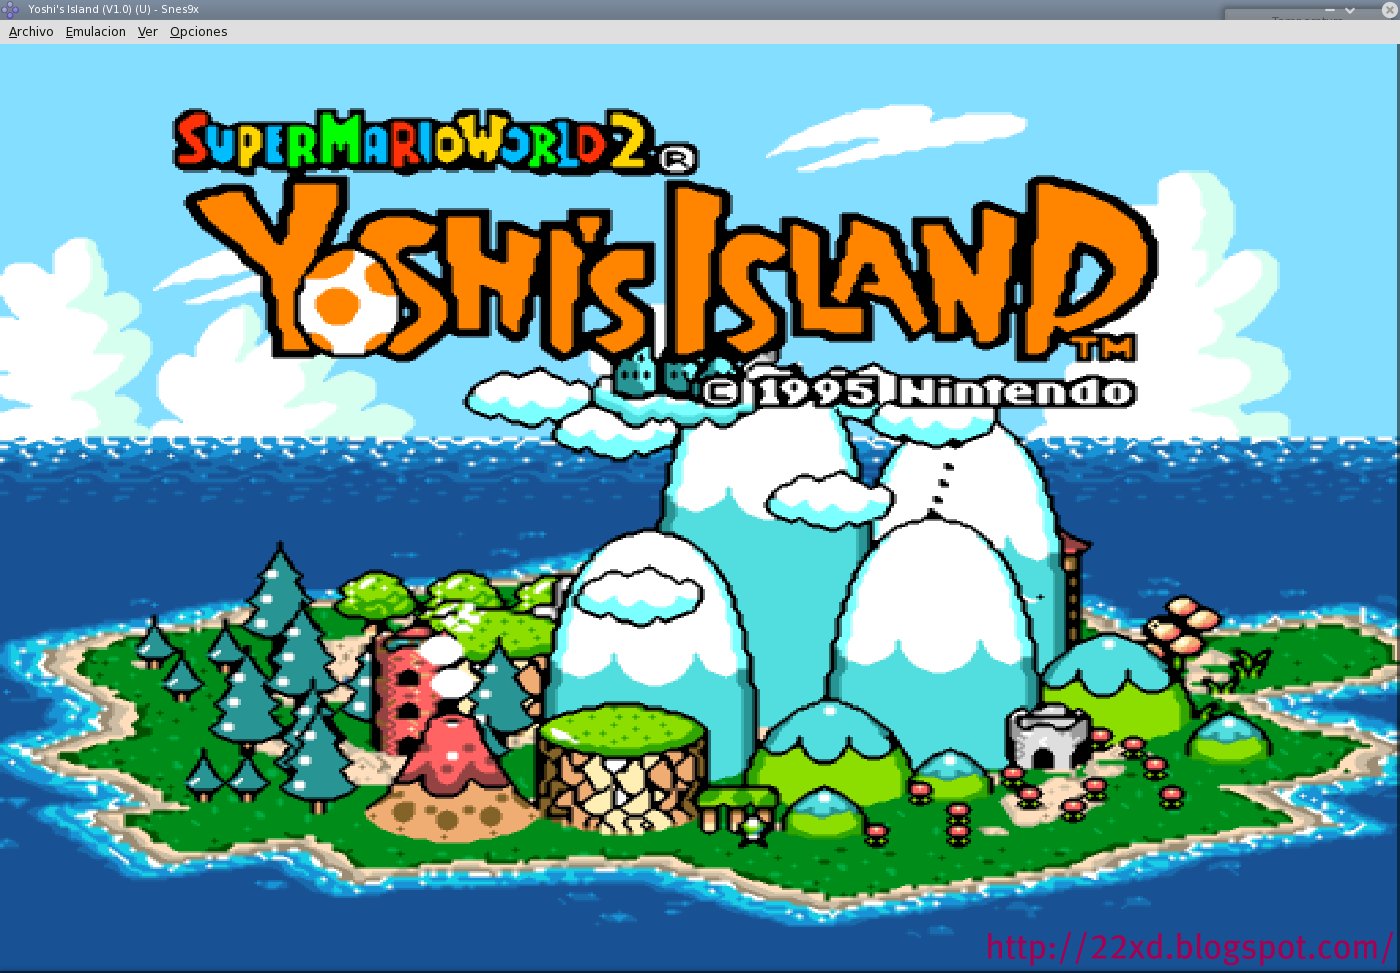 Yoshi island 2. Super Mario World 2 - Yoshi's Island Snes. Йоши Айленд супер Марио. Yoshi Island Wii. Йоши Айленд 1 уровень.